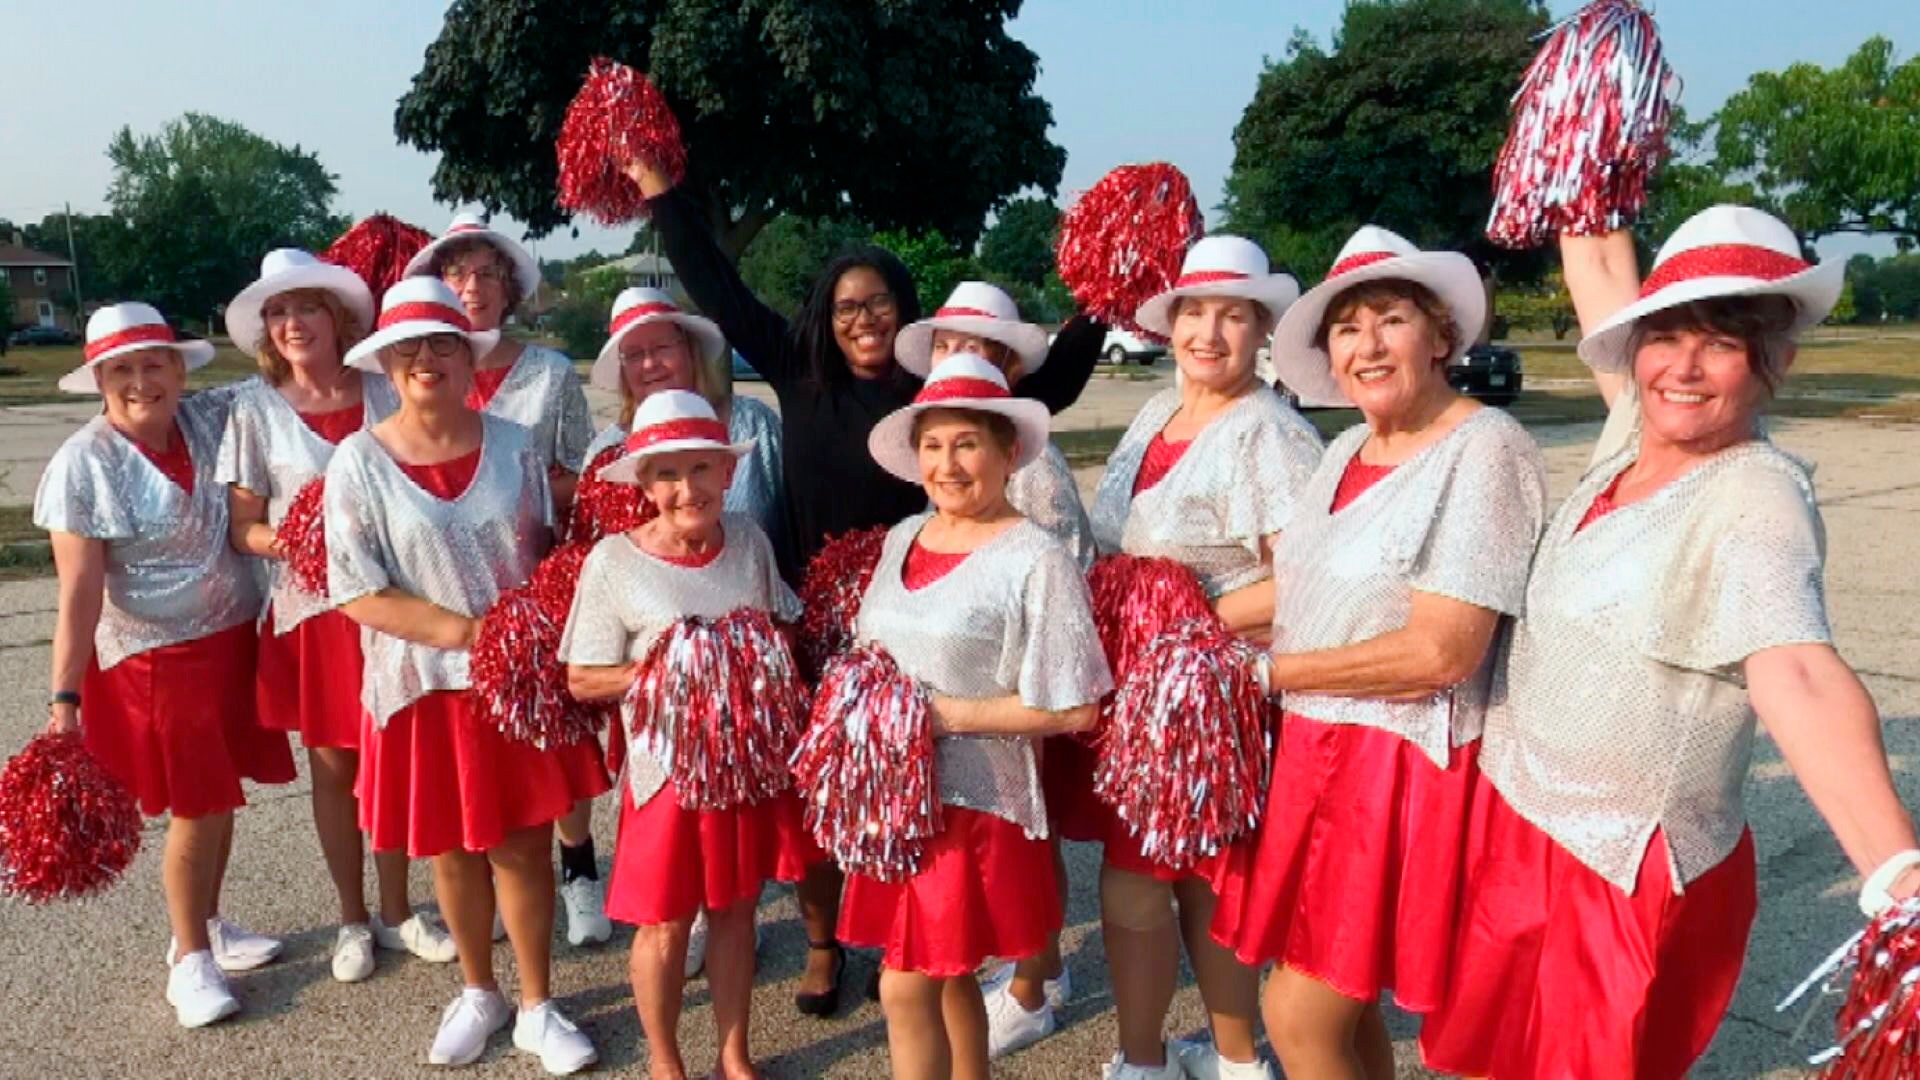 Milwaukee Dancing Grannies make parade return after Waukesha tragedy